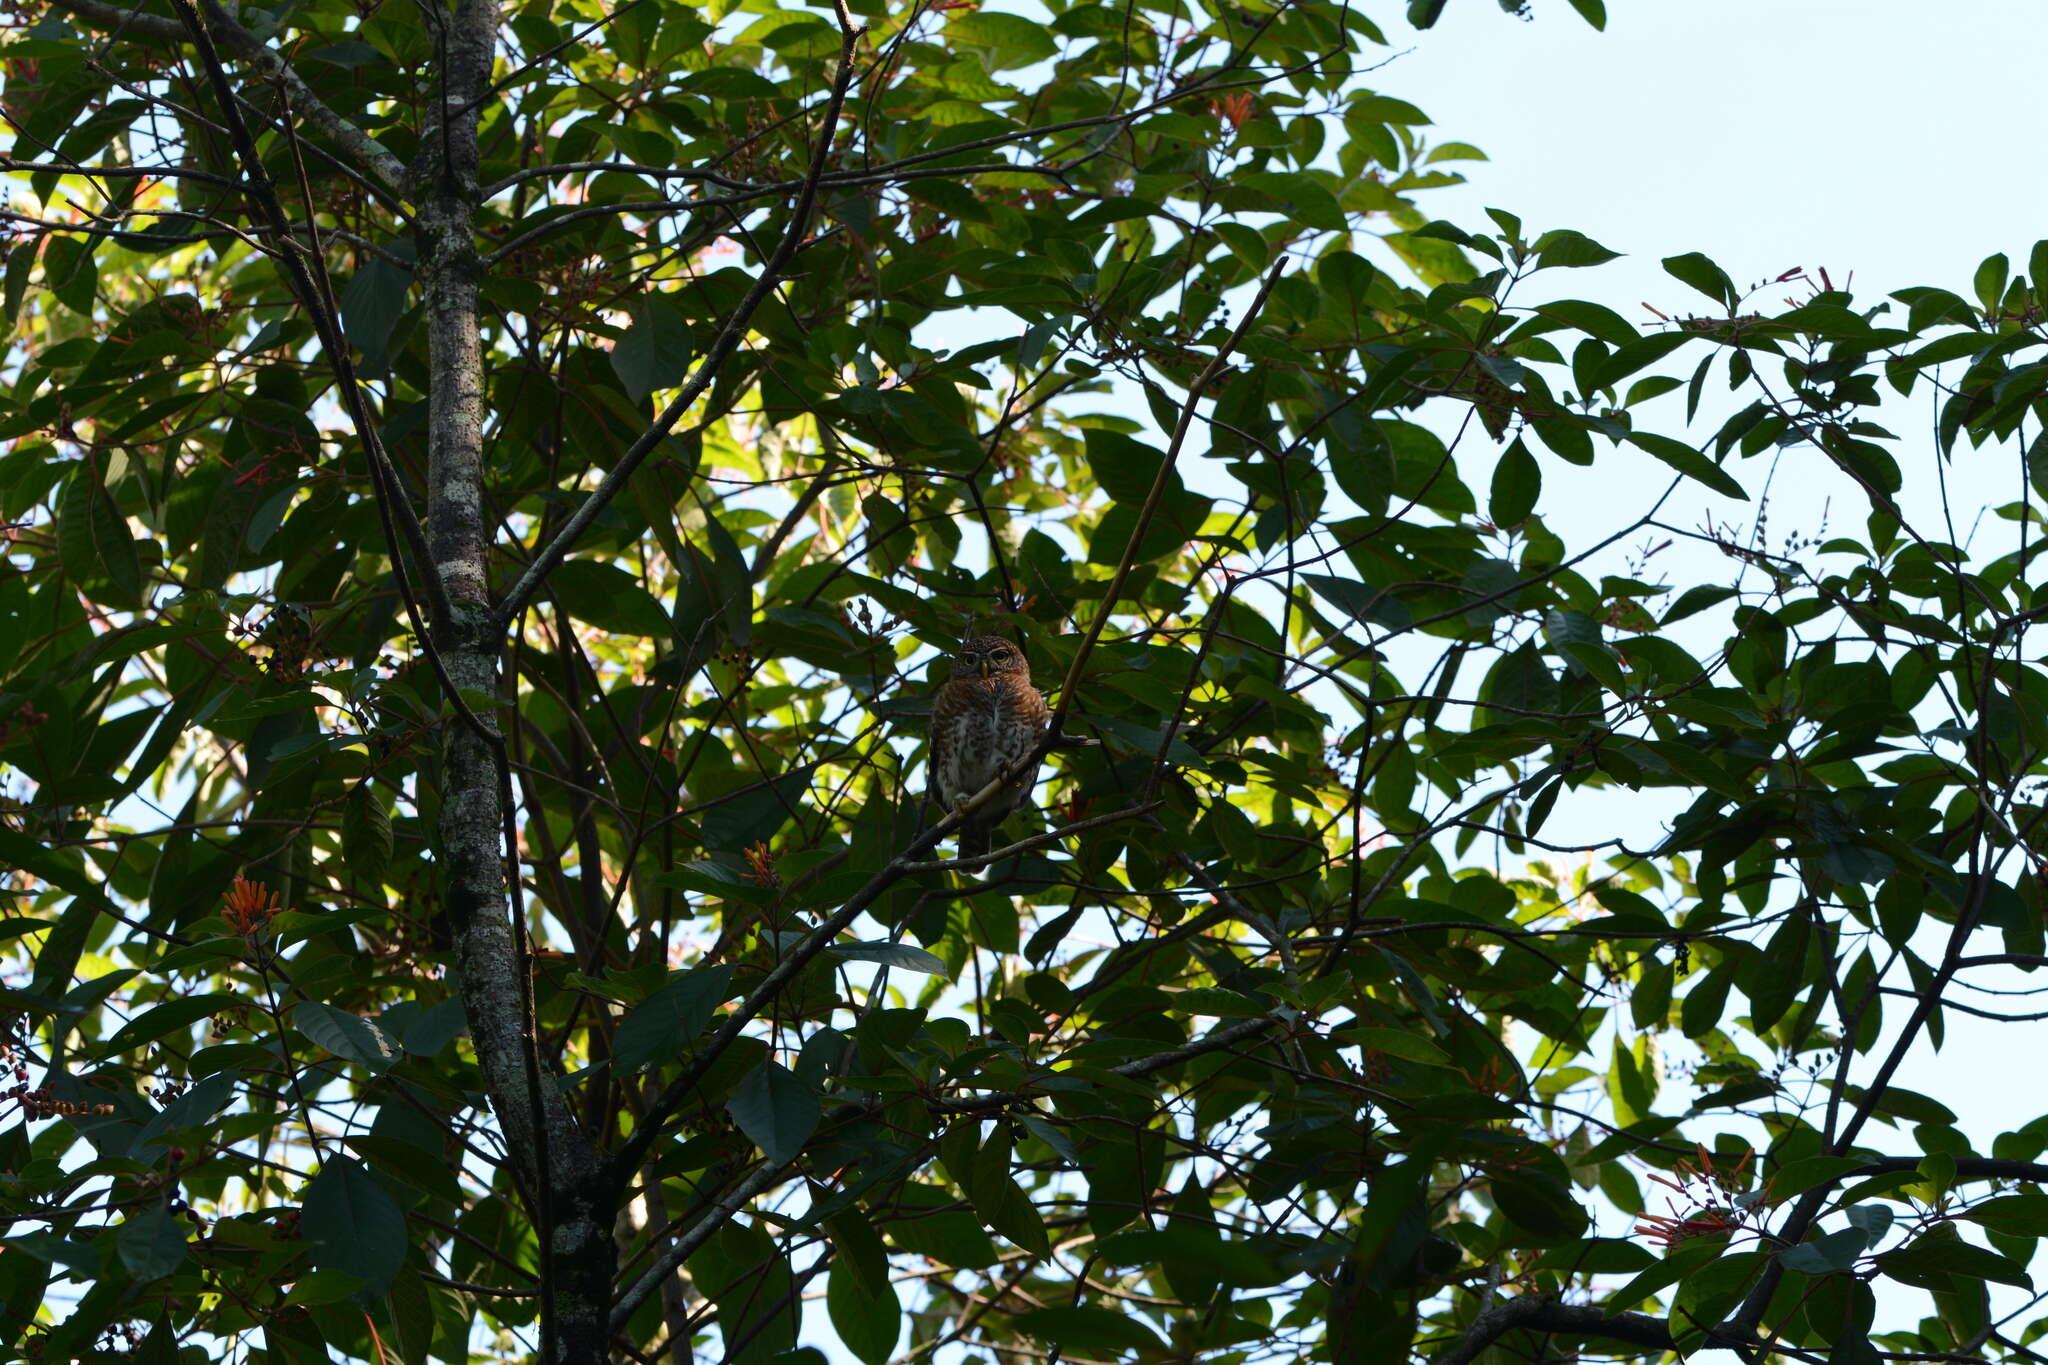 Image of Cuban Pygmy Owl